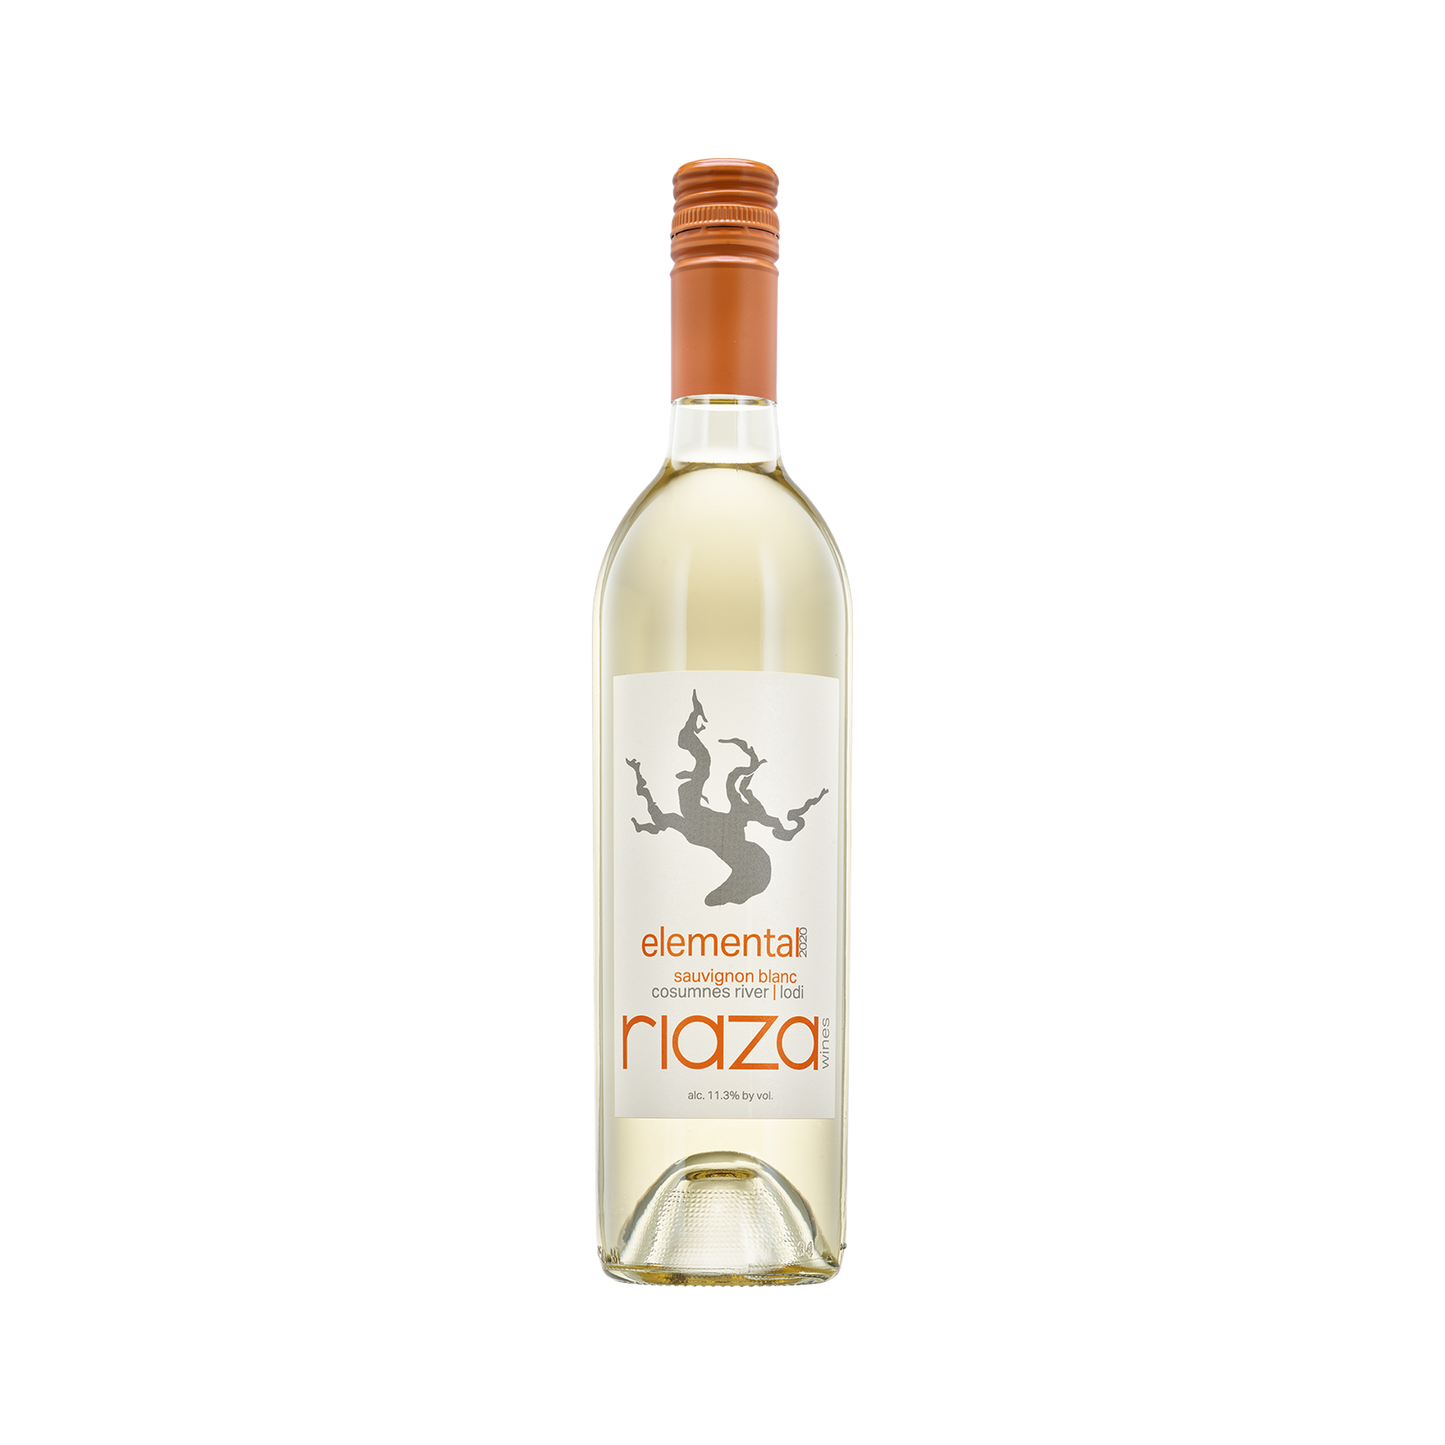 A bottle of Riaza 2020 'Elemental' Sauvignon Blanc